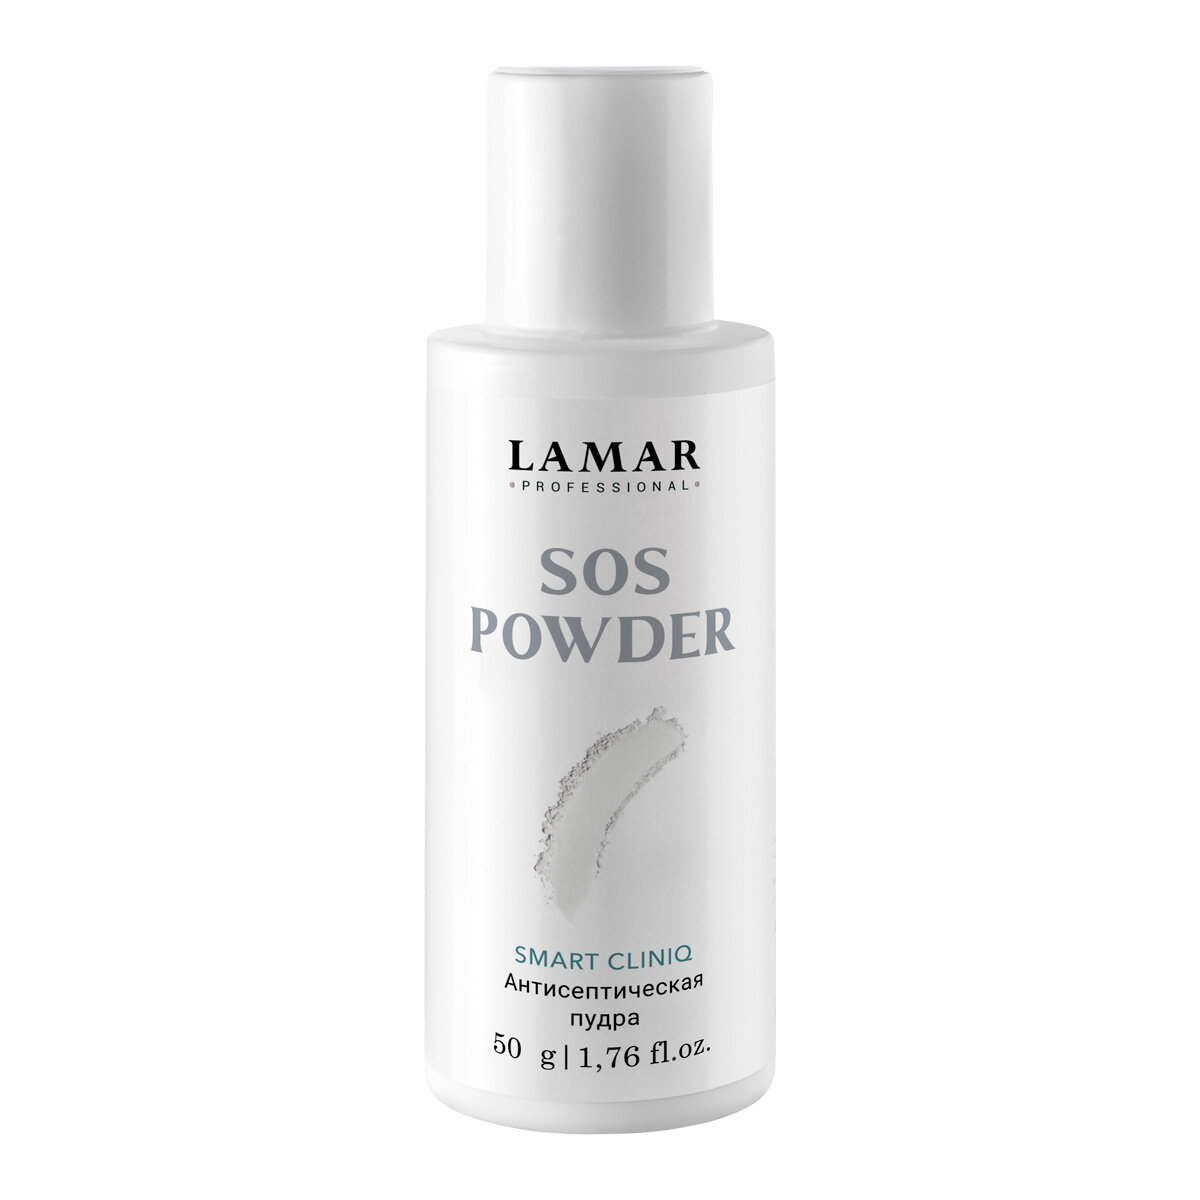 Lamar Professional, Антисептическая пудра SOS powder , 50г